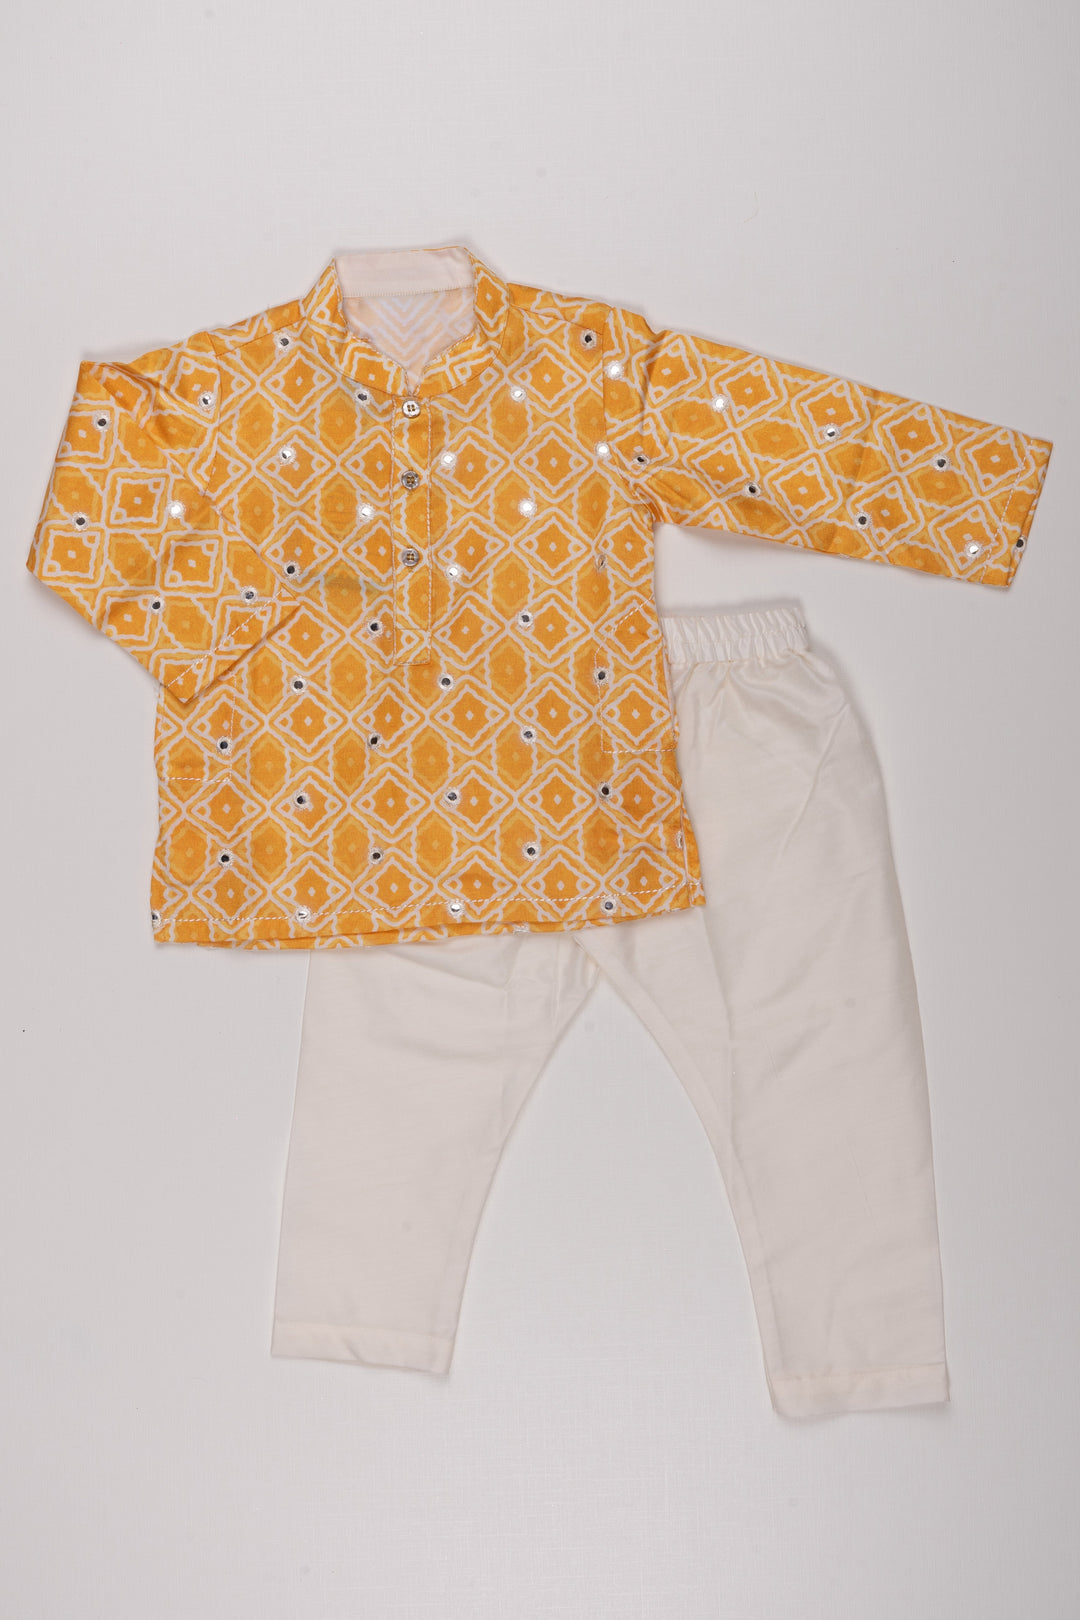 The Nesavu Boys Kurtha Set Golden Glory: Mirror-Embroidered Geometric Printed Yellow Kurta Shirt & Pant Set for Boys Nesavu 14 (6M) / Yellow / Silk Blend BES400B-14 Kids Kurta and Pant Set | Authentic Indian Boys Wear | The Nesavu